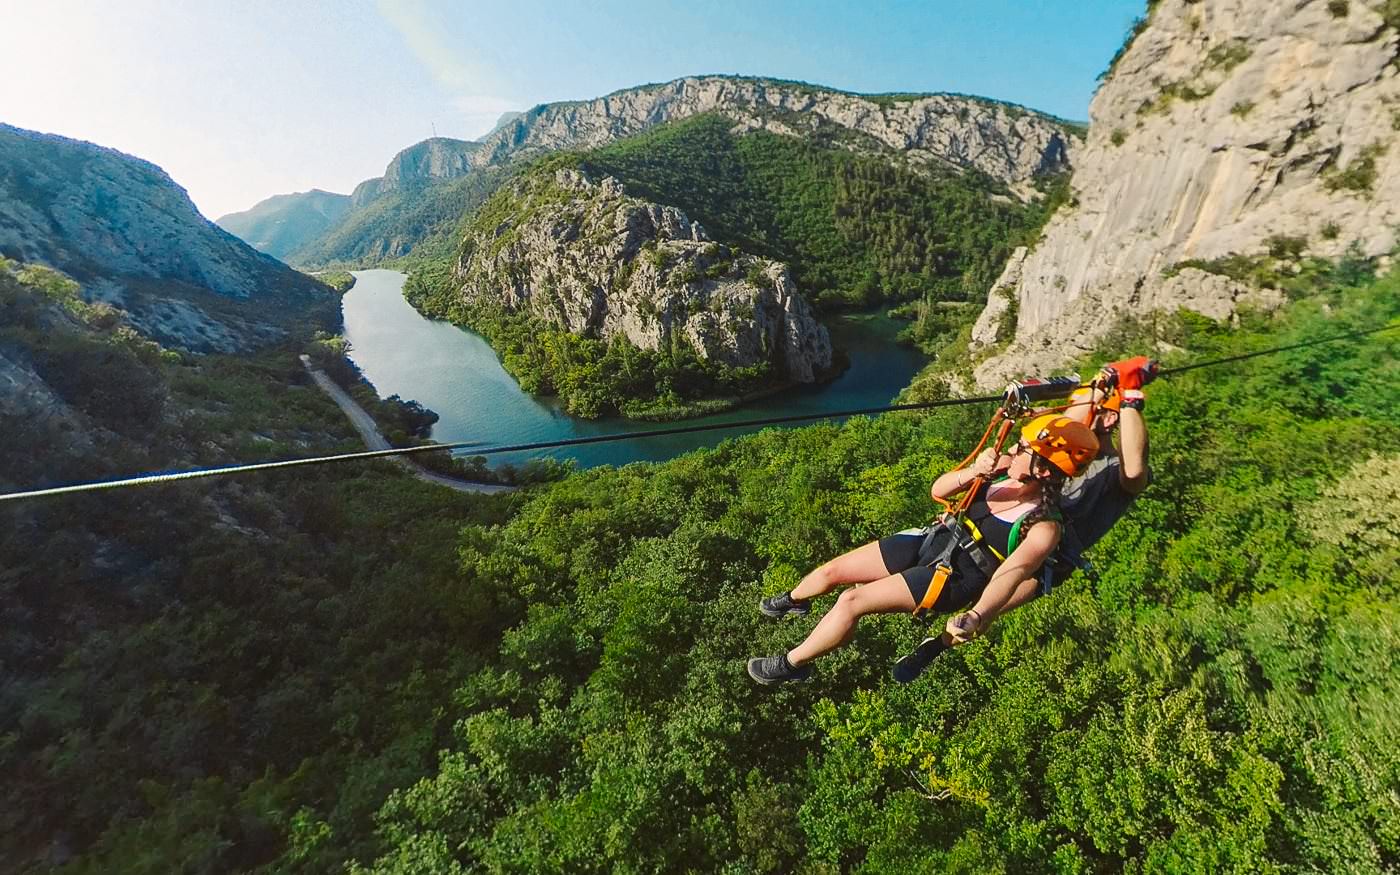 The Omis Zipline tour in Cetina Canyon, Croatia